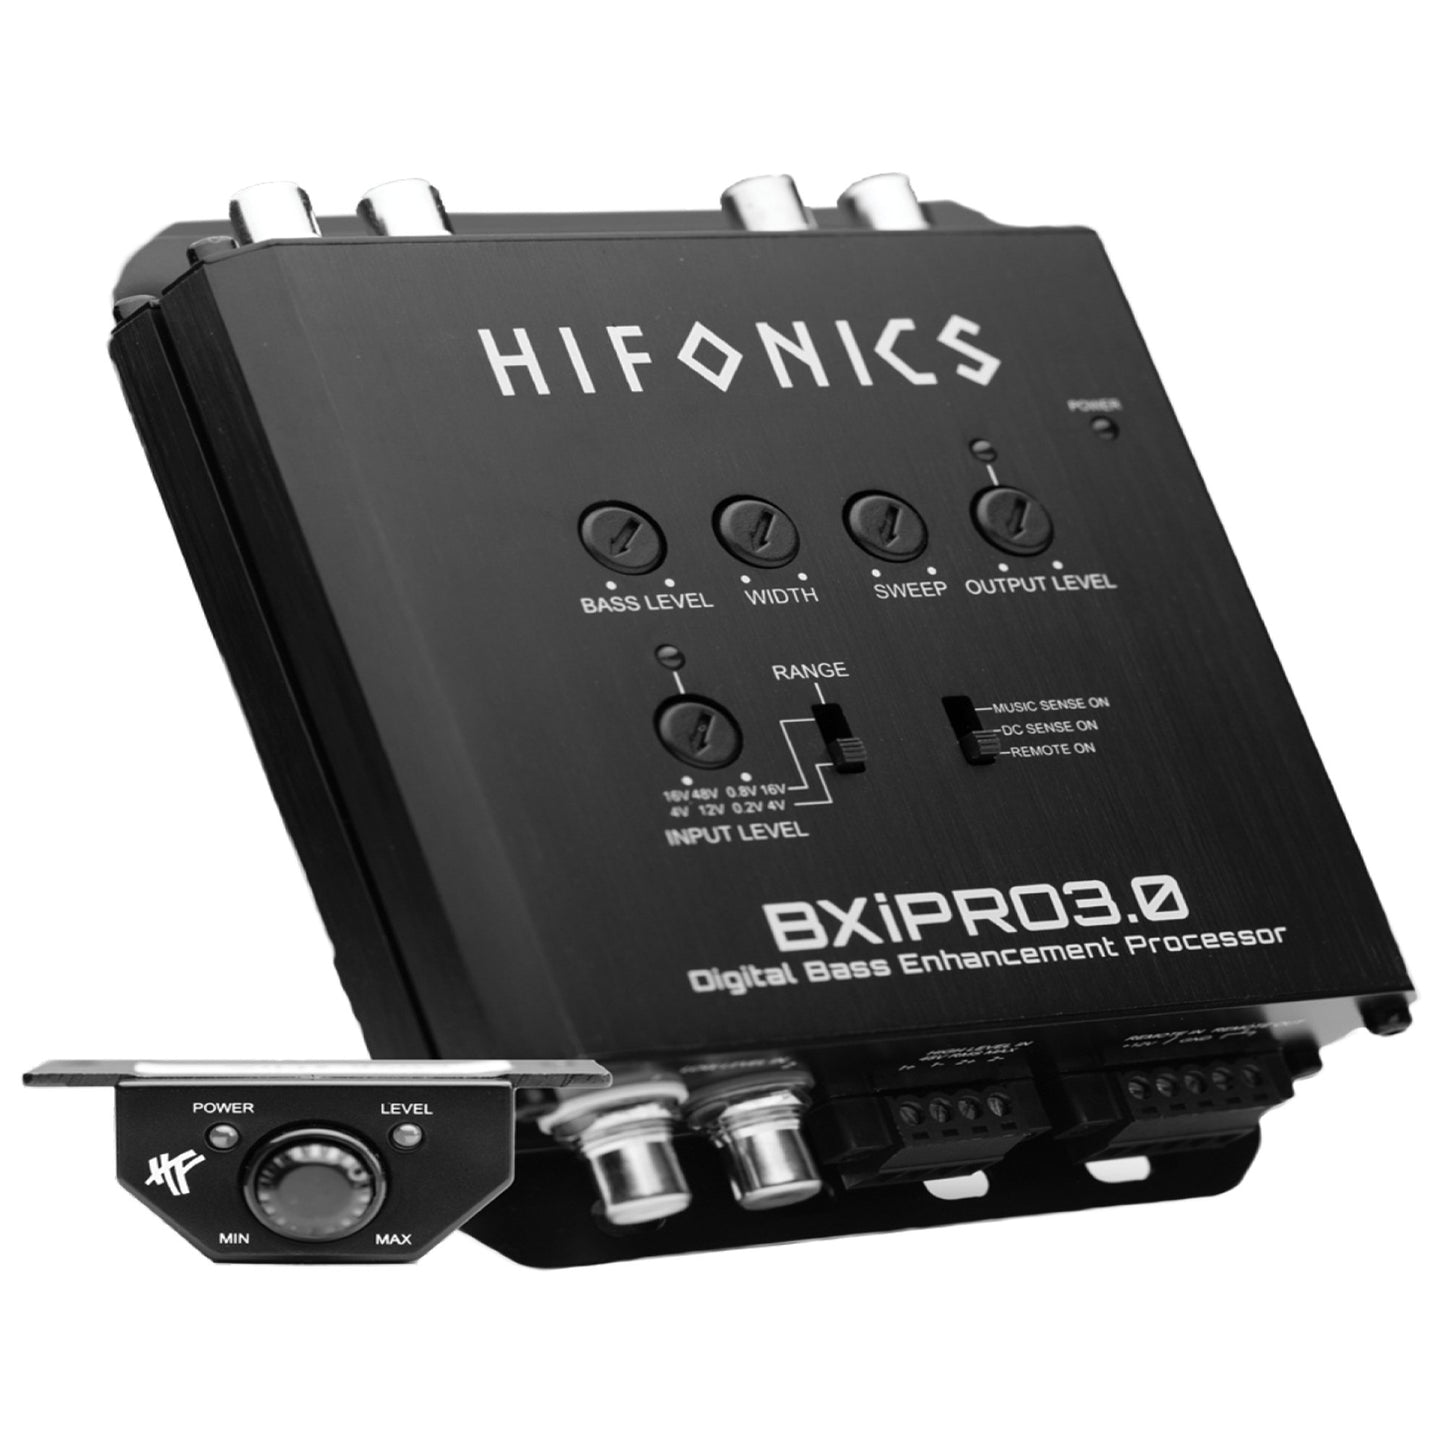 Hifonics BXiPRO3.0 Digital Bass Enhancement Processor with Dash-Mount Remote